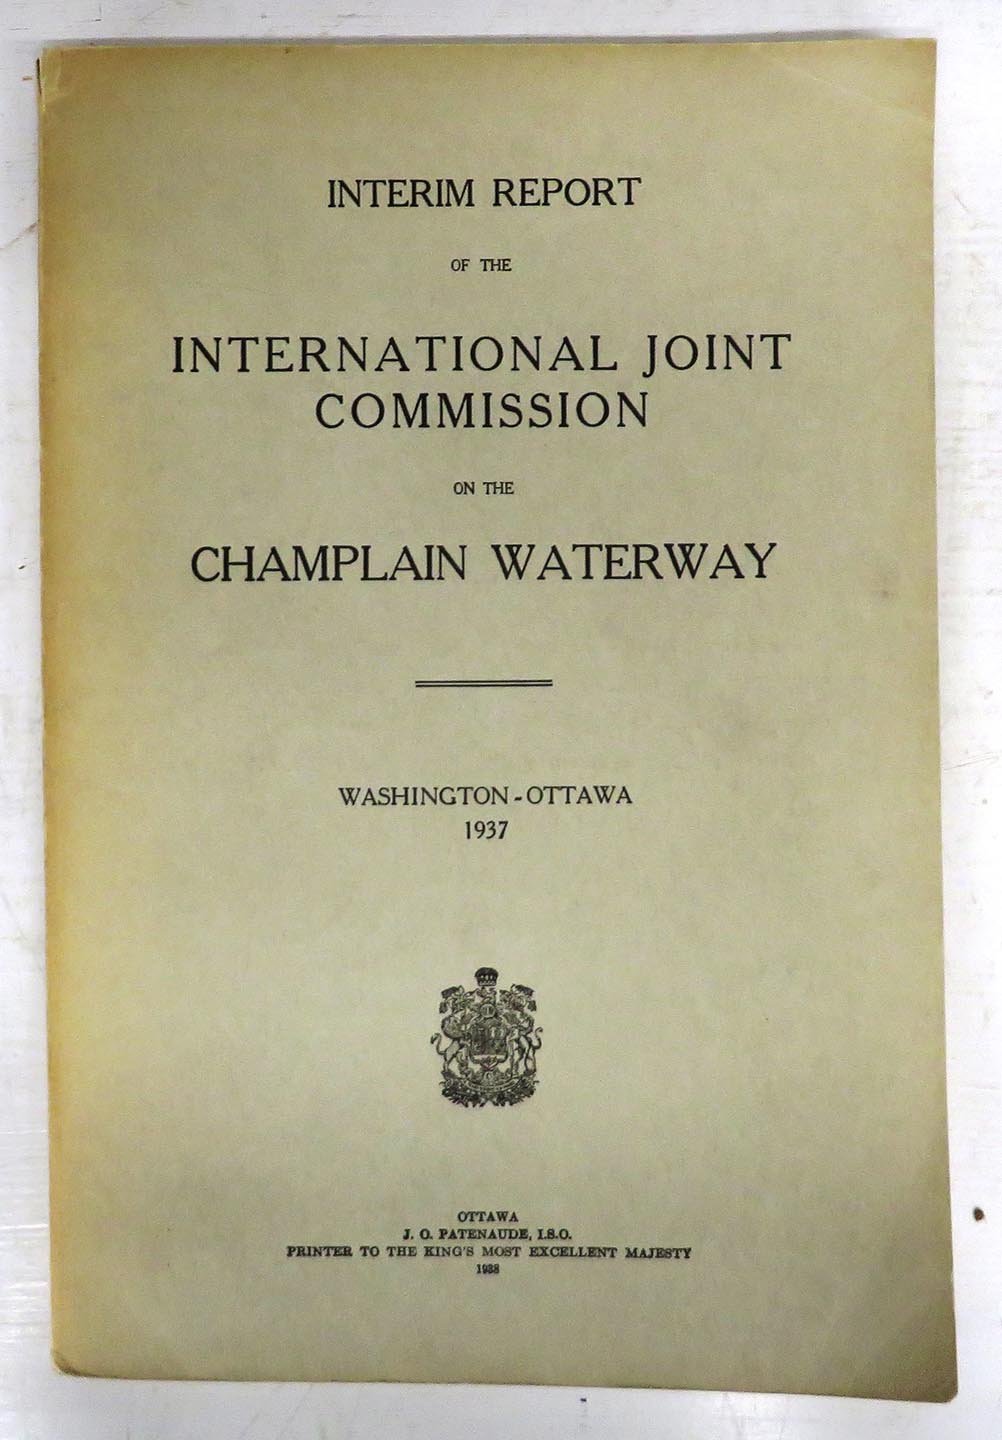 Interim Report of the International Joint Commission on the Champlain Waterway Washington - Ottawa, 1937